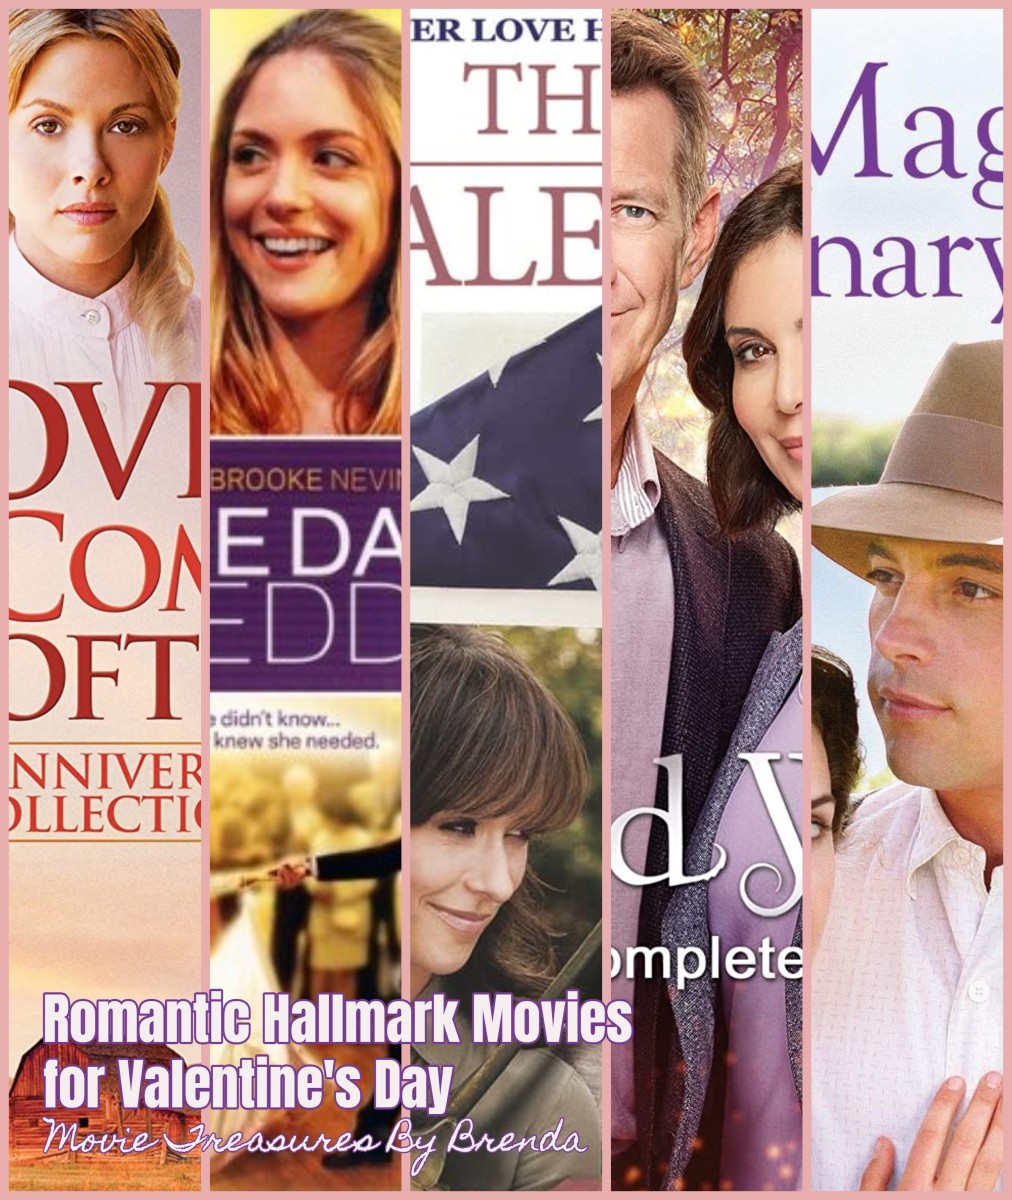 Five Romantic Hallmark Movies for Valentine's Day